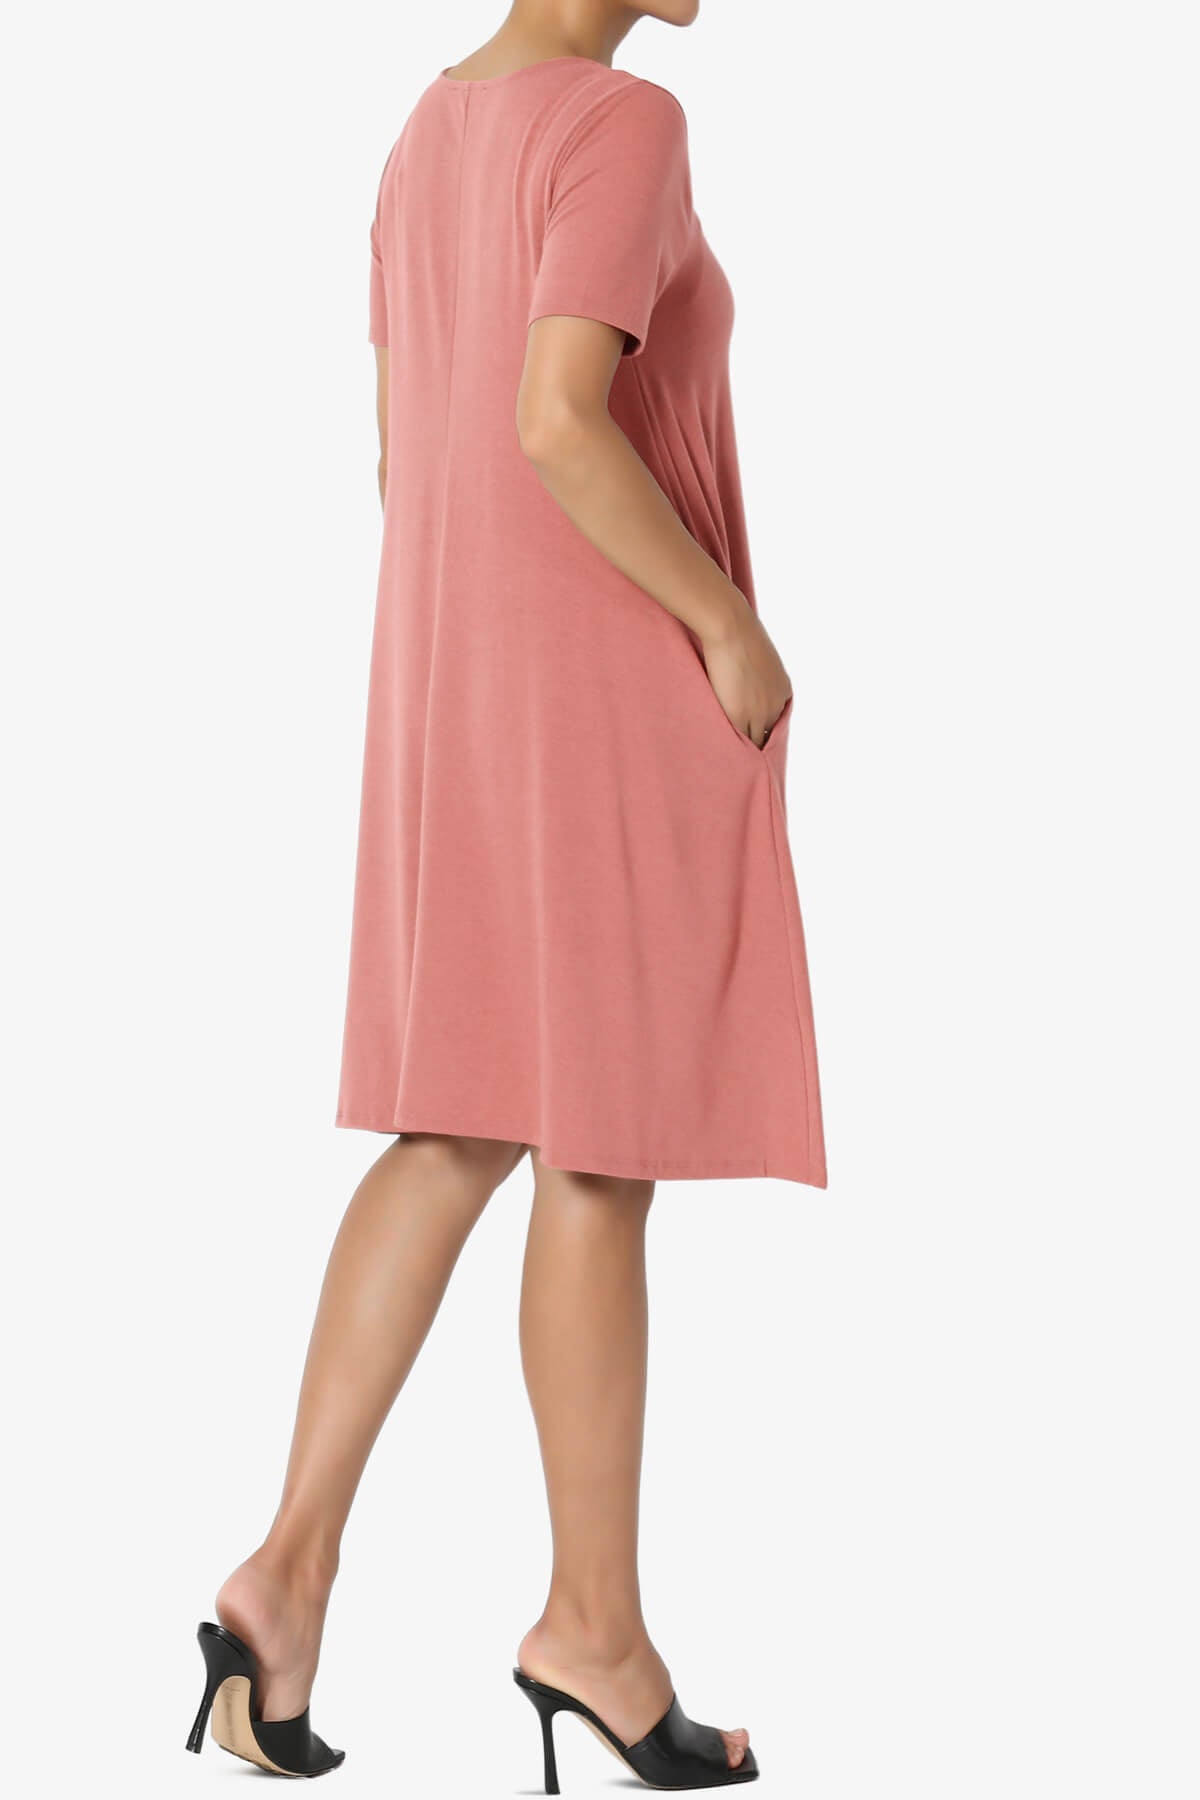 Allie Short Sleeve Jersey A-Line Dress ASH ROSE_4